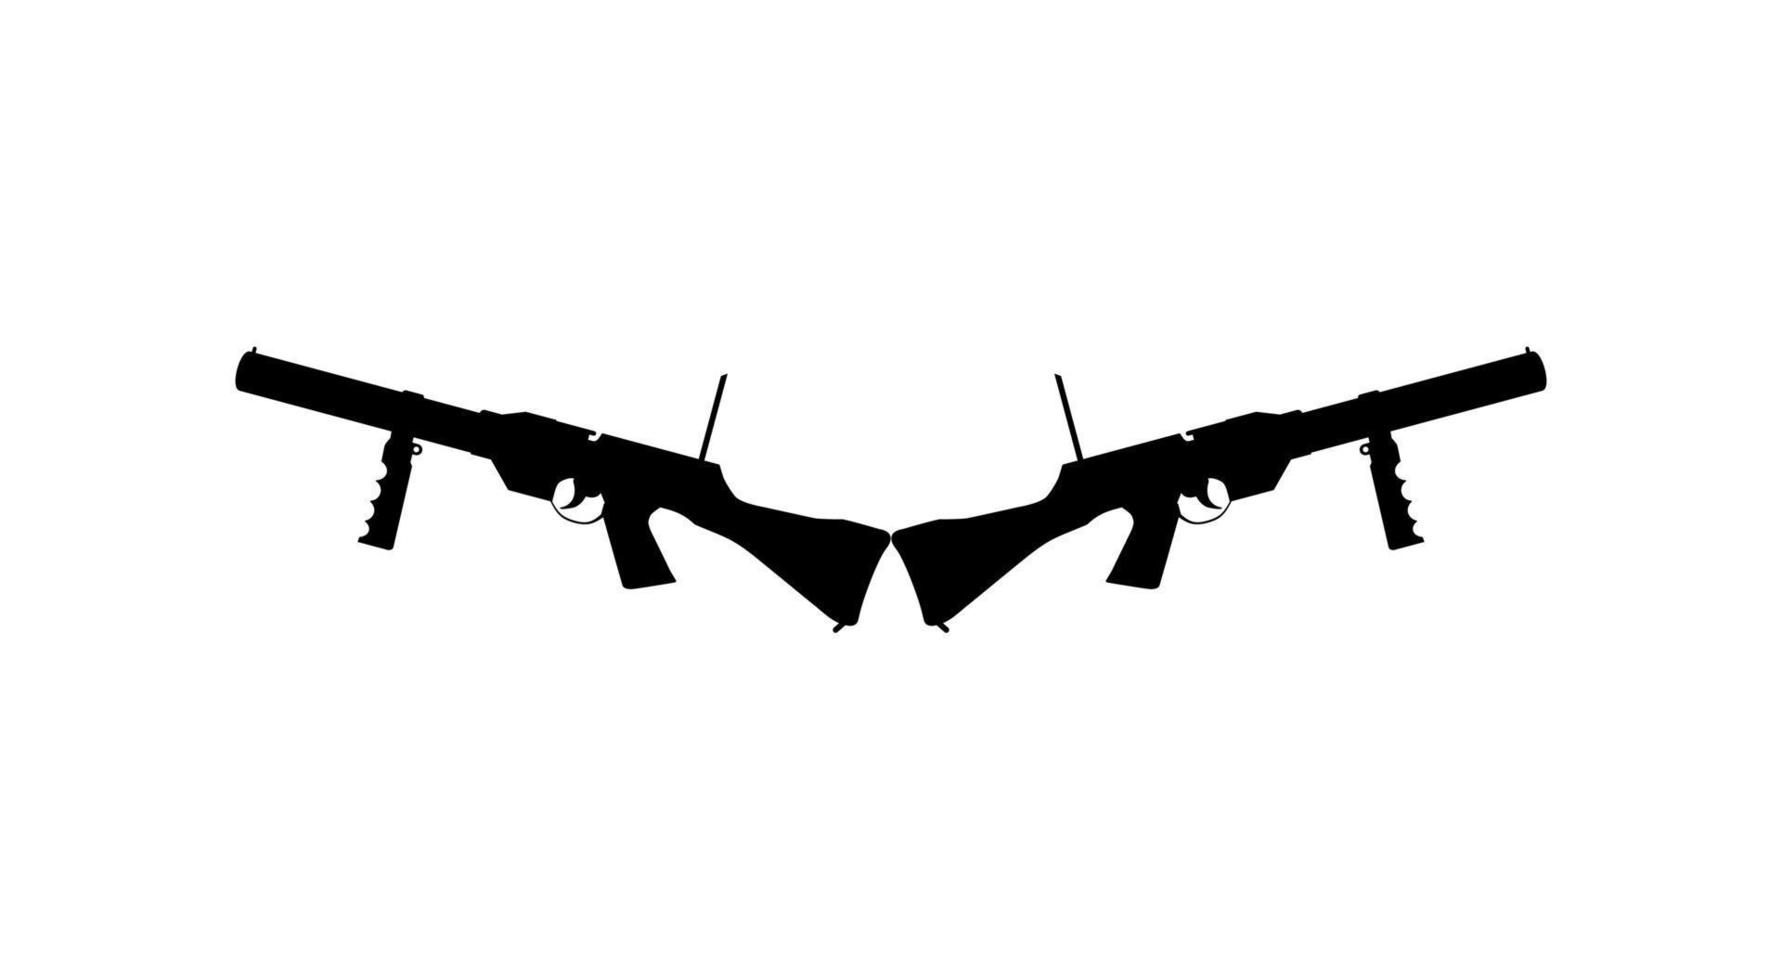 Silhouette der Waffe für Logo, Piktogramm, Kunstillustration, Website oder Grafikdesignelement. Vektor-Illustration vektor